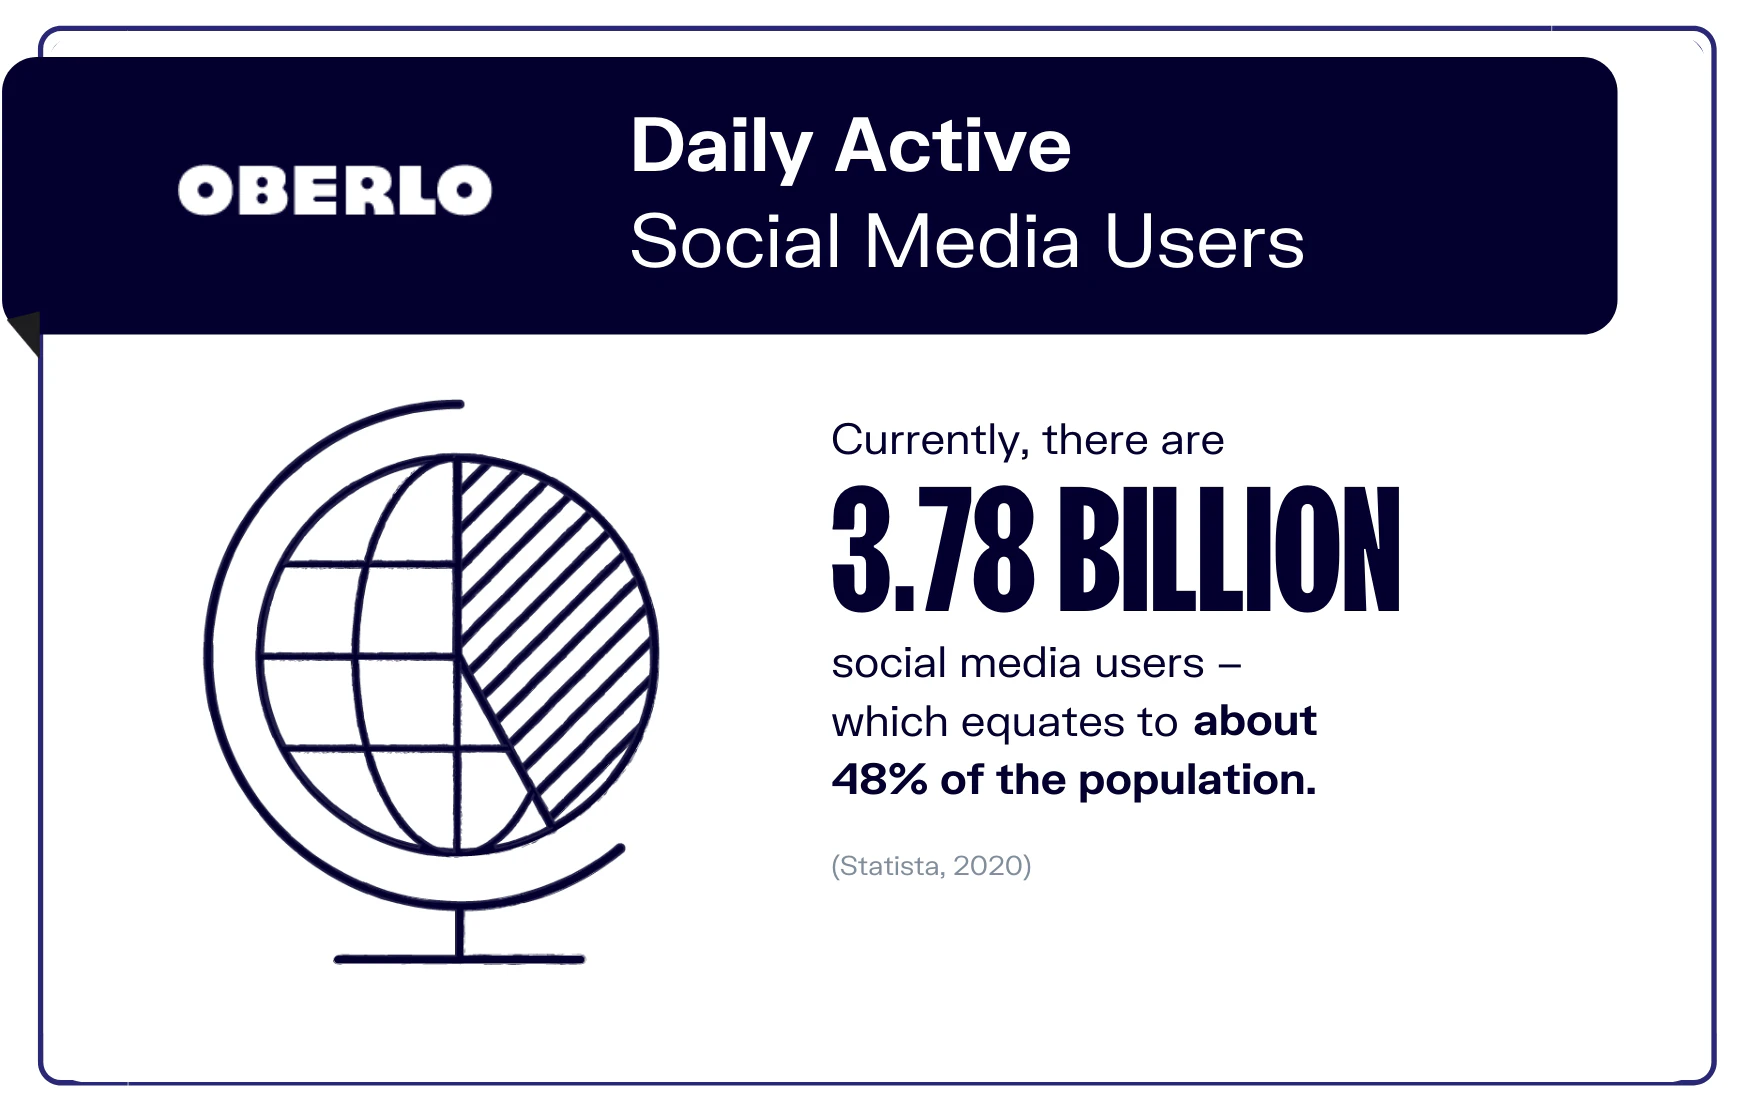 Oberlo statistic: 3.78 Billion daily active social media users.